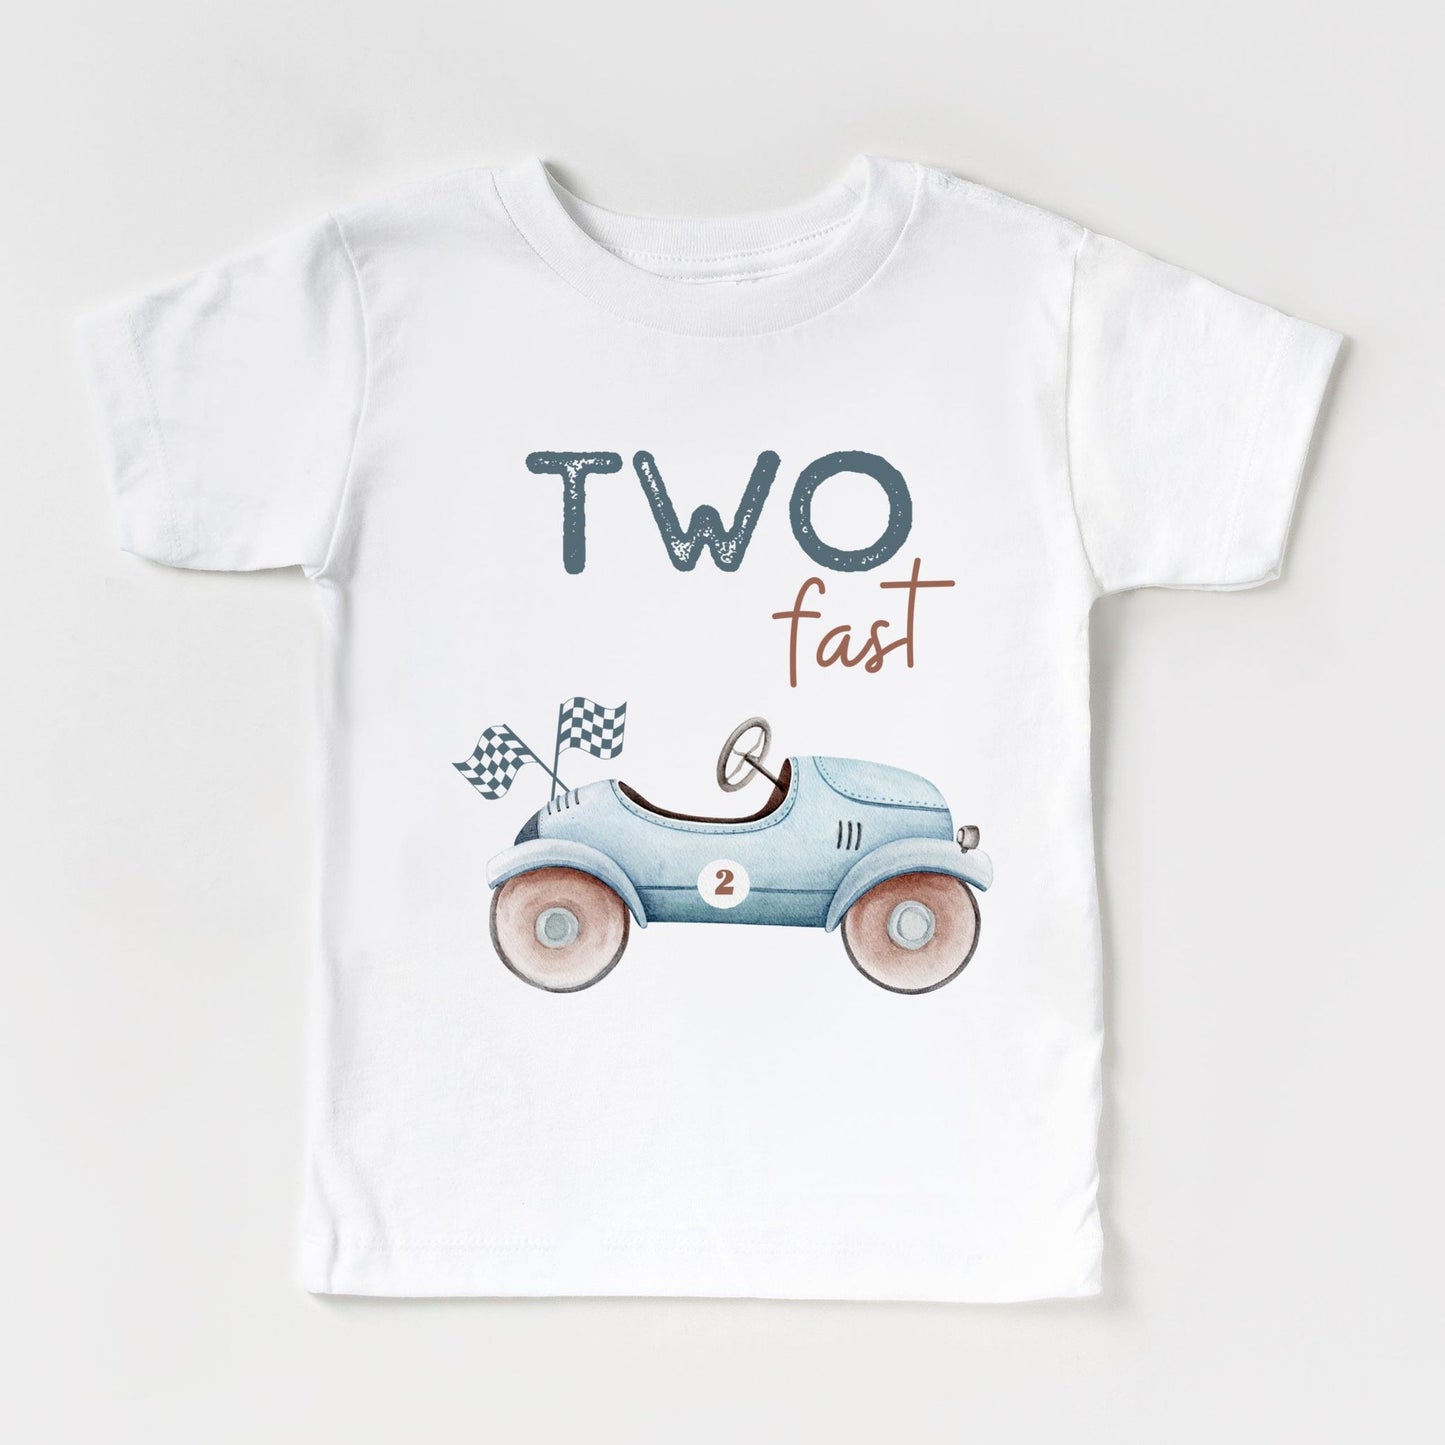 Two Fast Car Birthday T-shirt